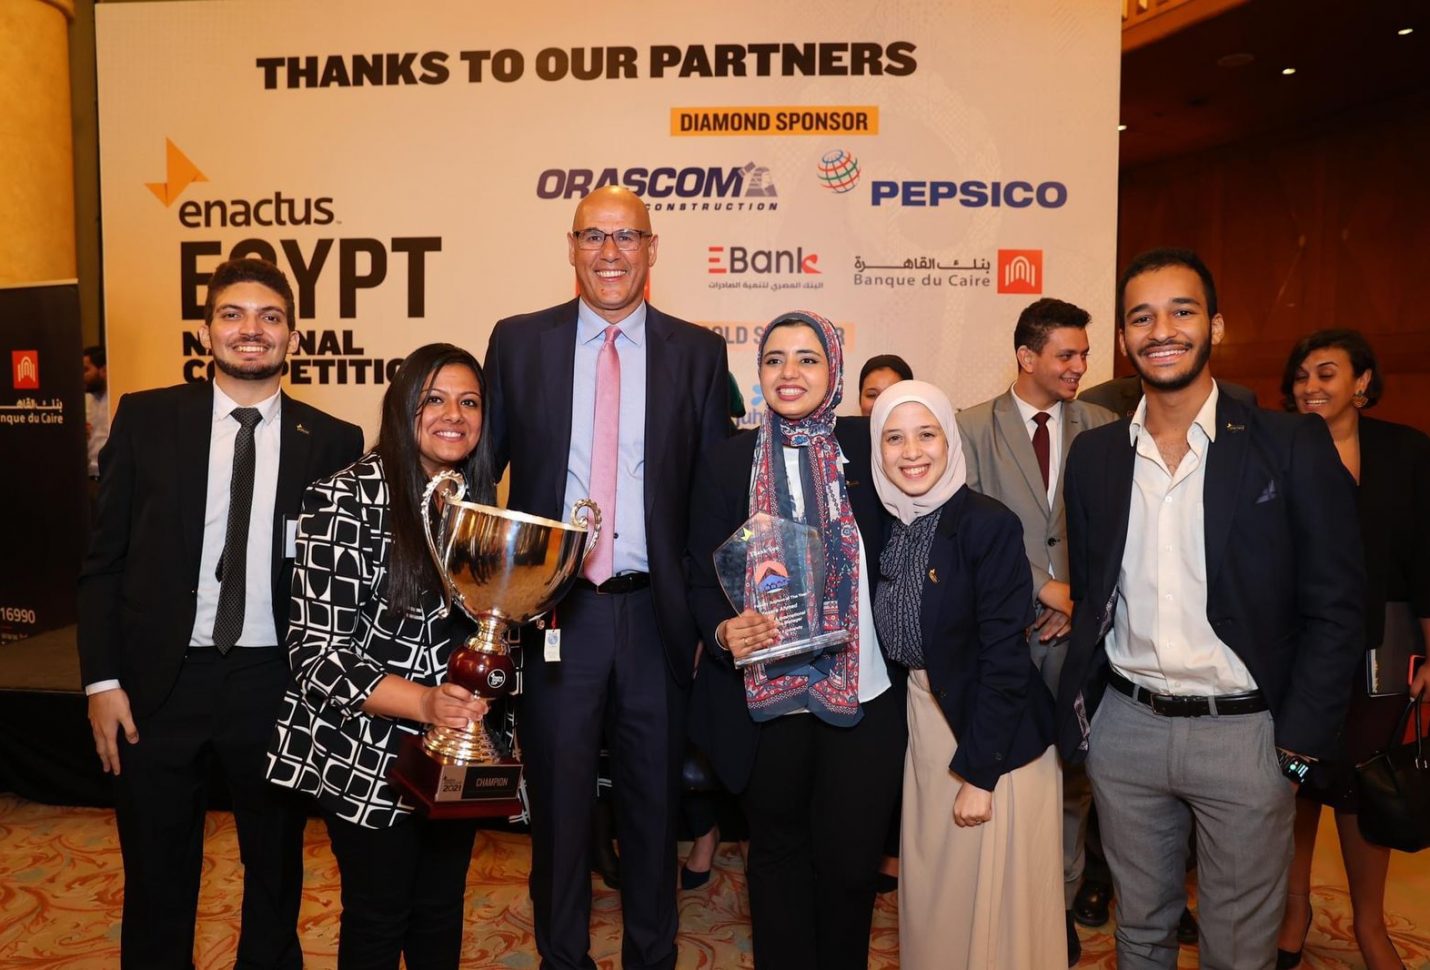 PepsiCo sponsors Enactus Egypt for 2nd straight year